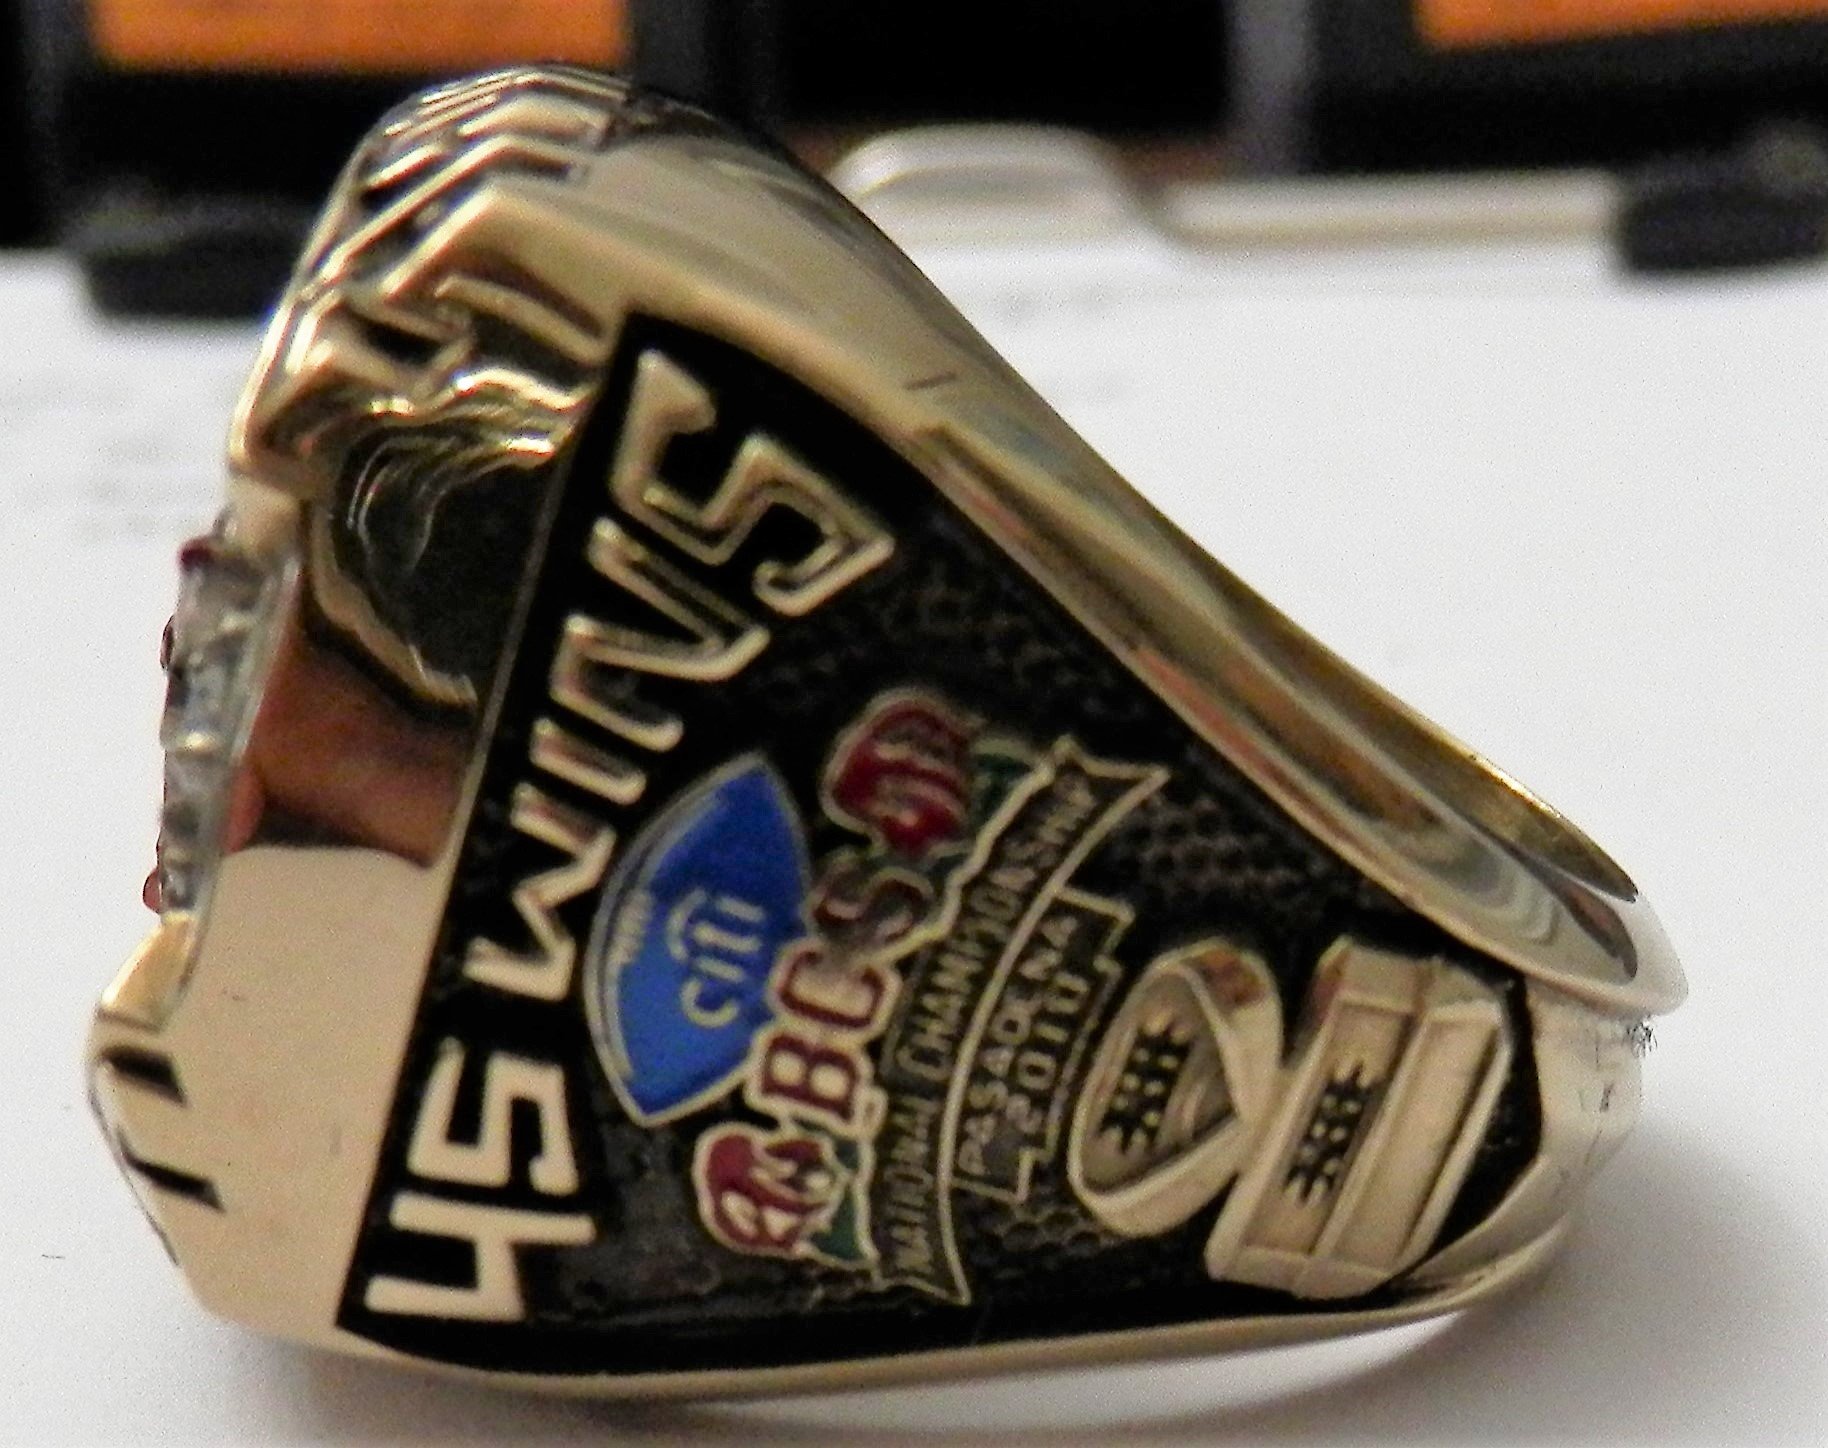 2009 National championship ring